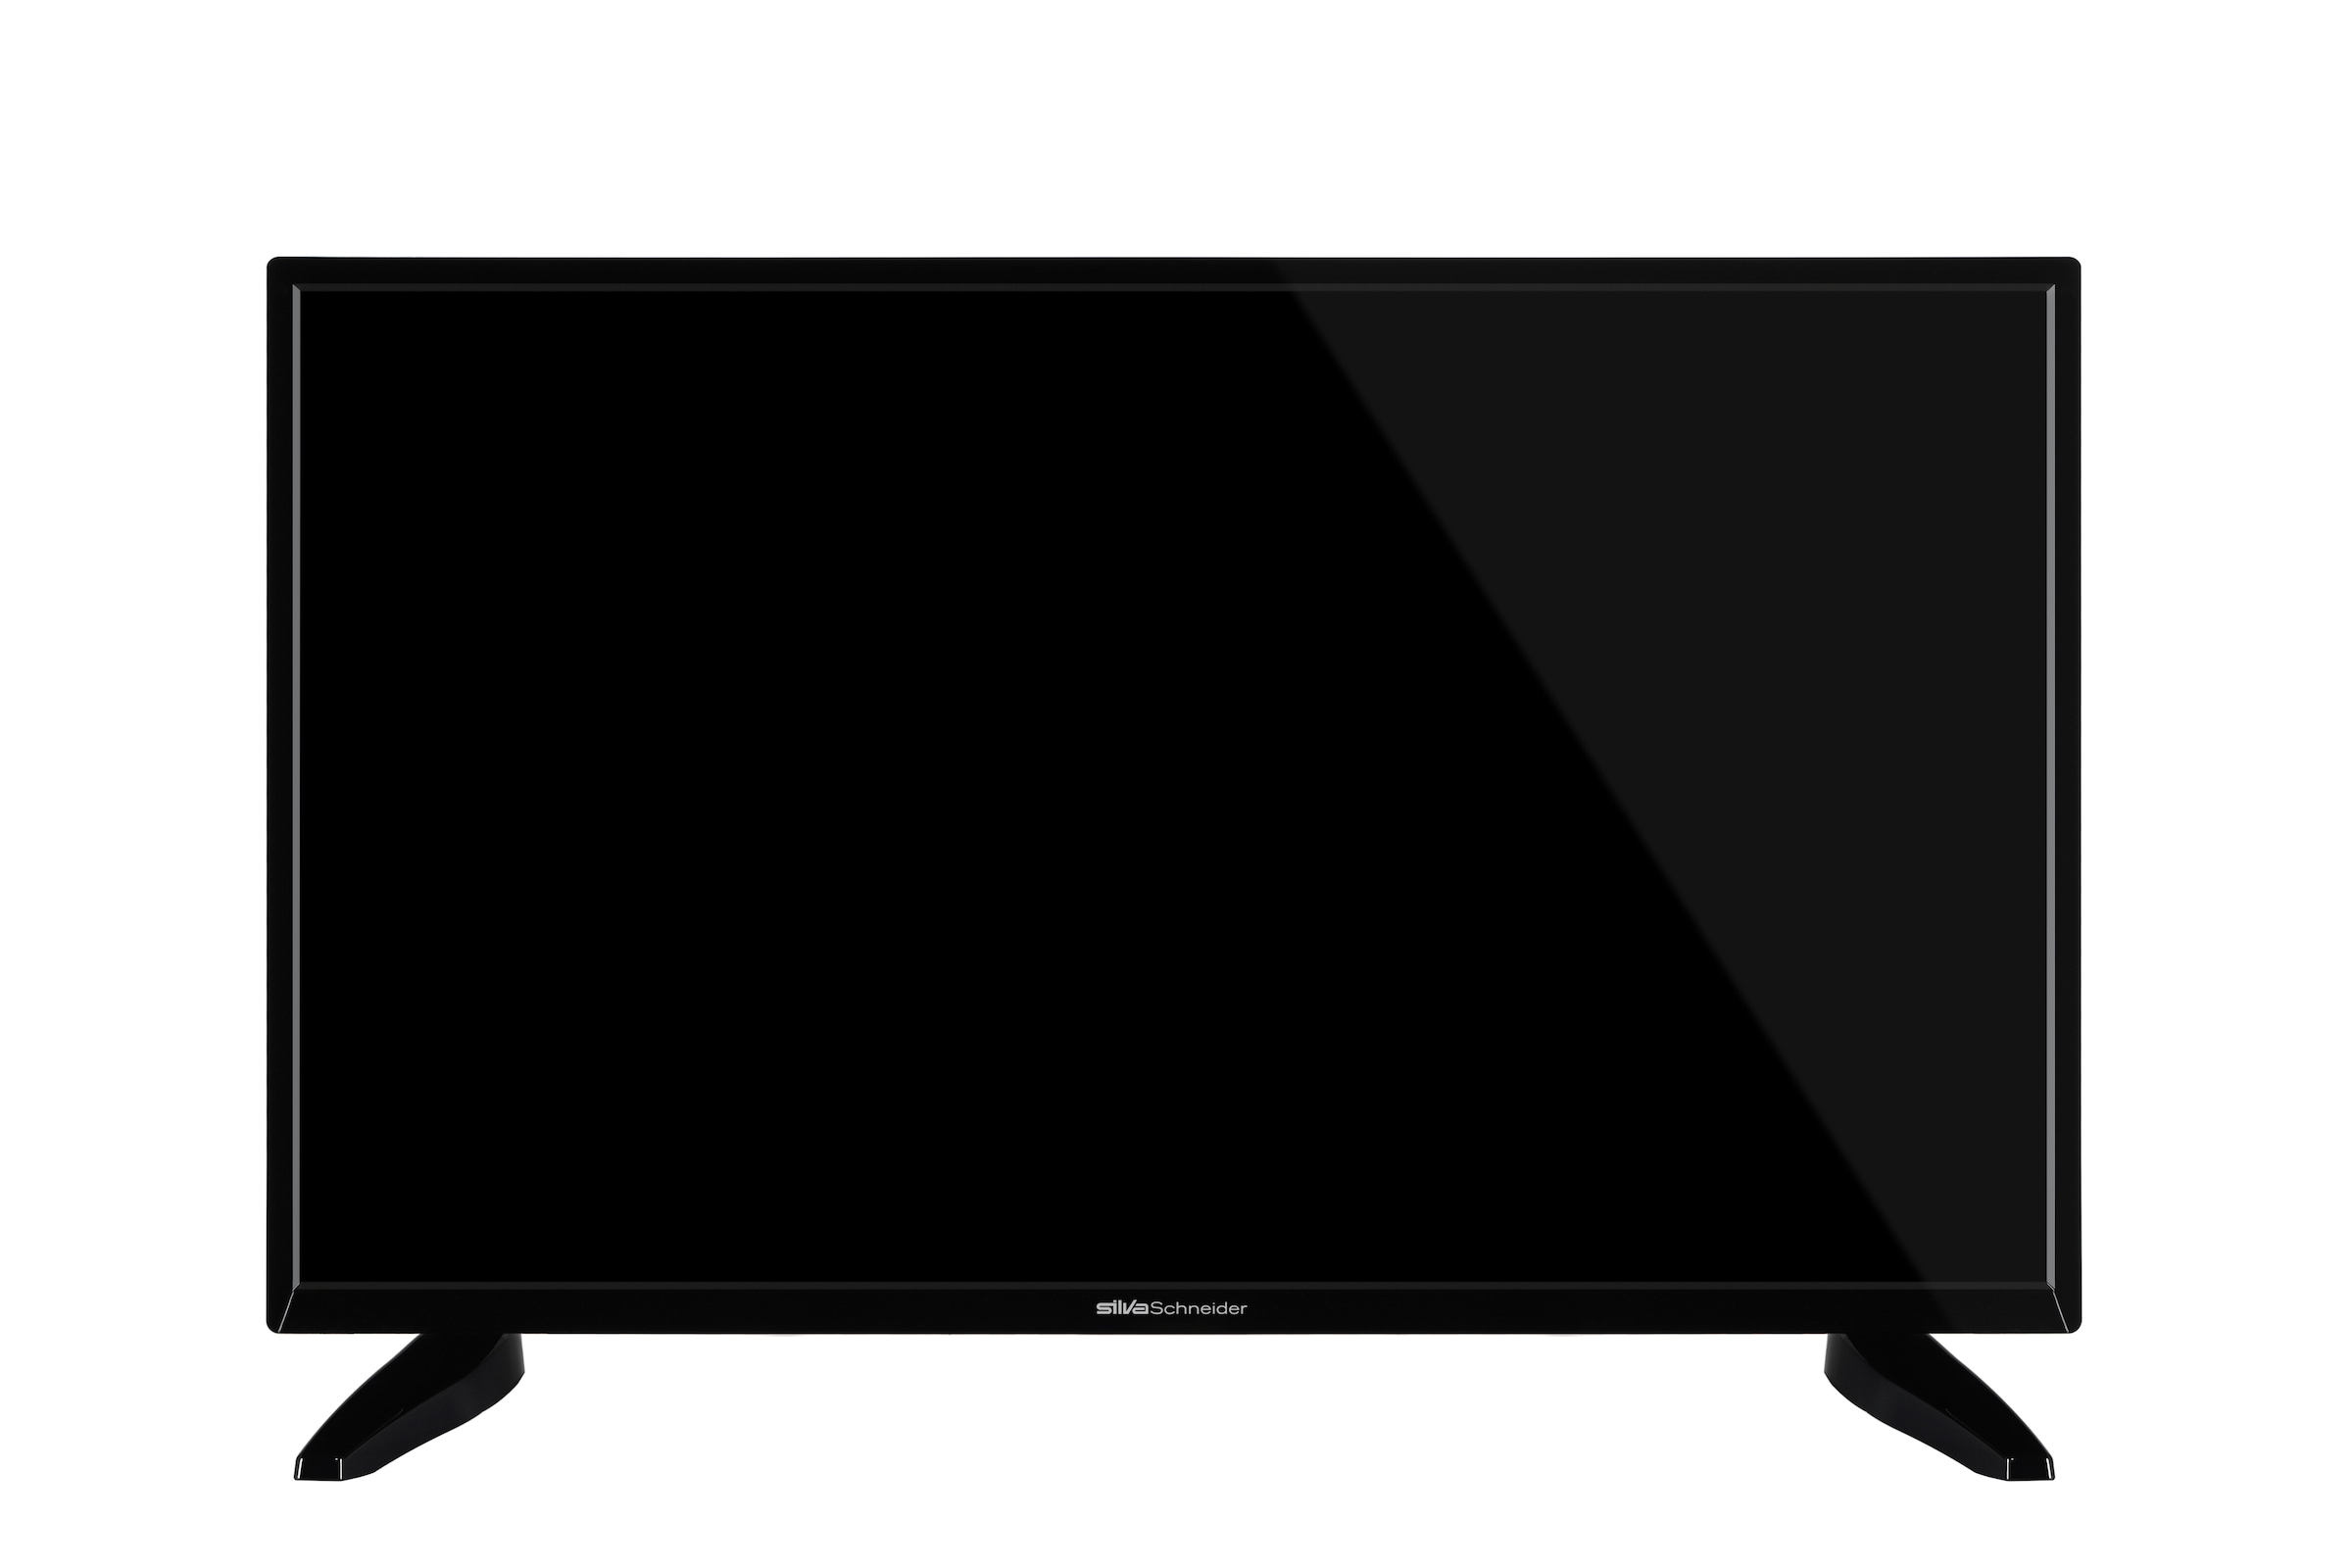 Silva Schneider LED-Fernseher »LED 32.59 HT«, 80 cm/32 Zoll, HD ready